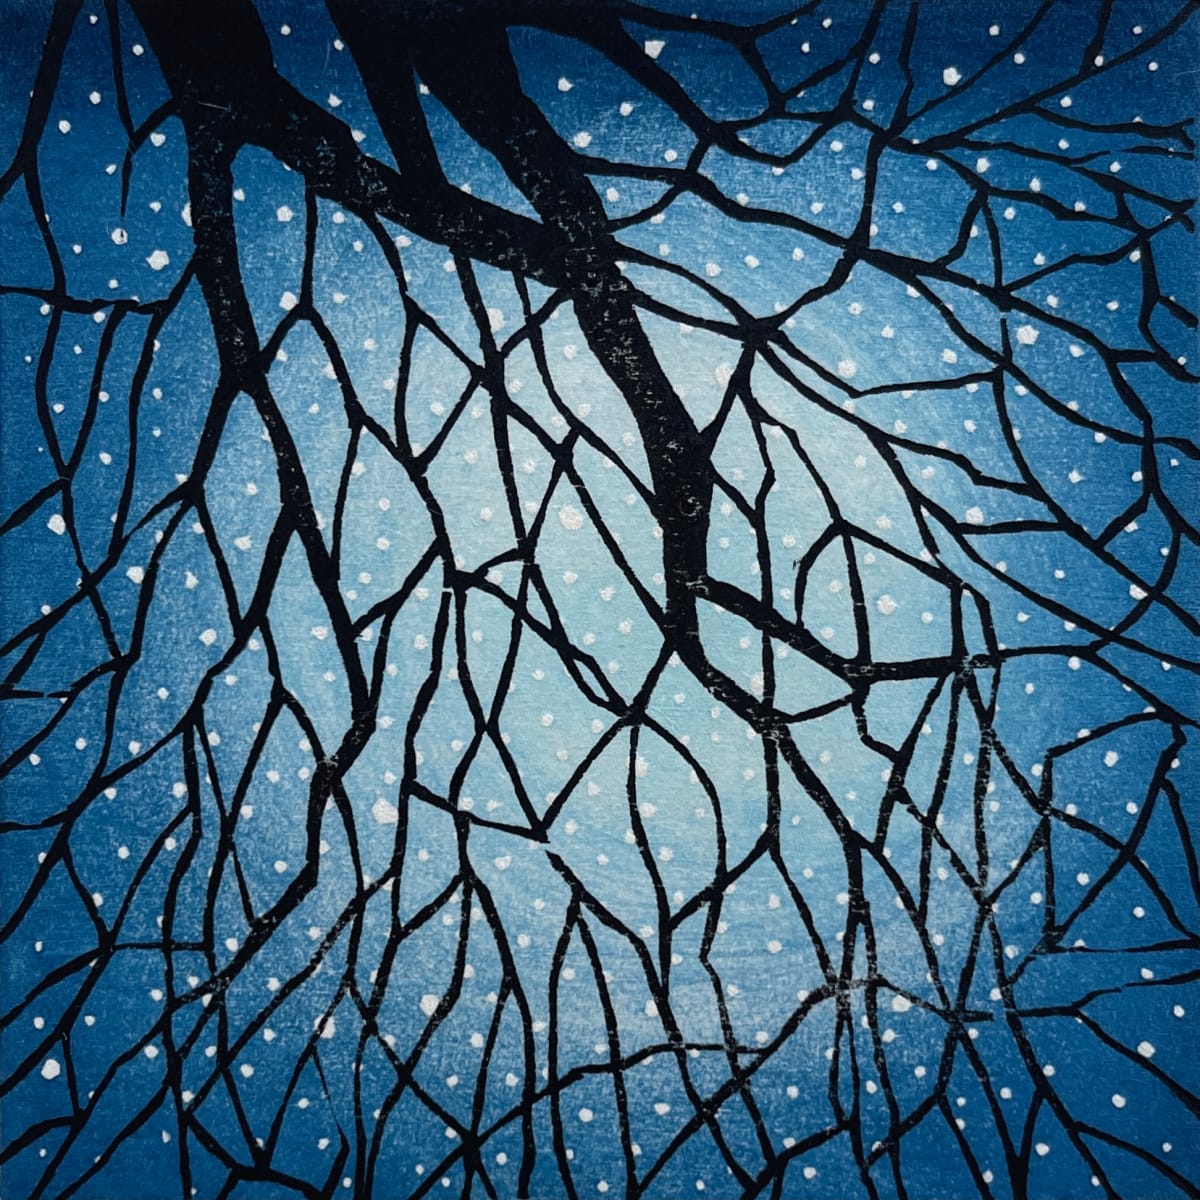 Constellation #4 by Mara Cozzolino 